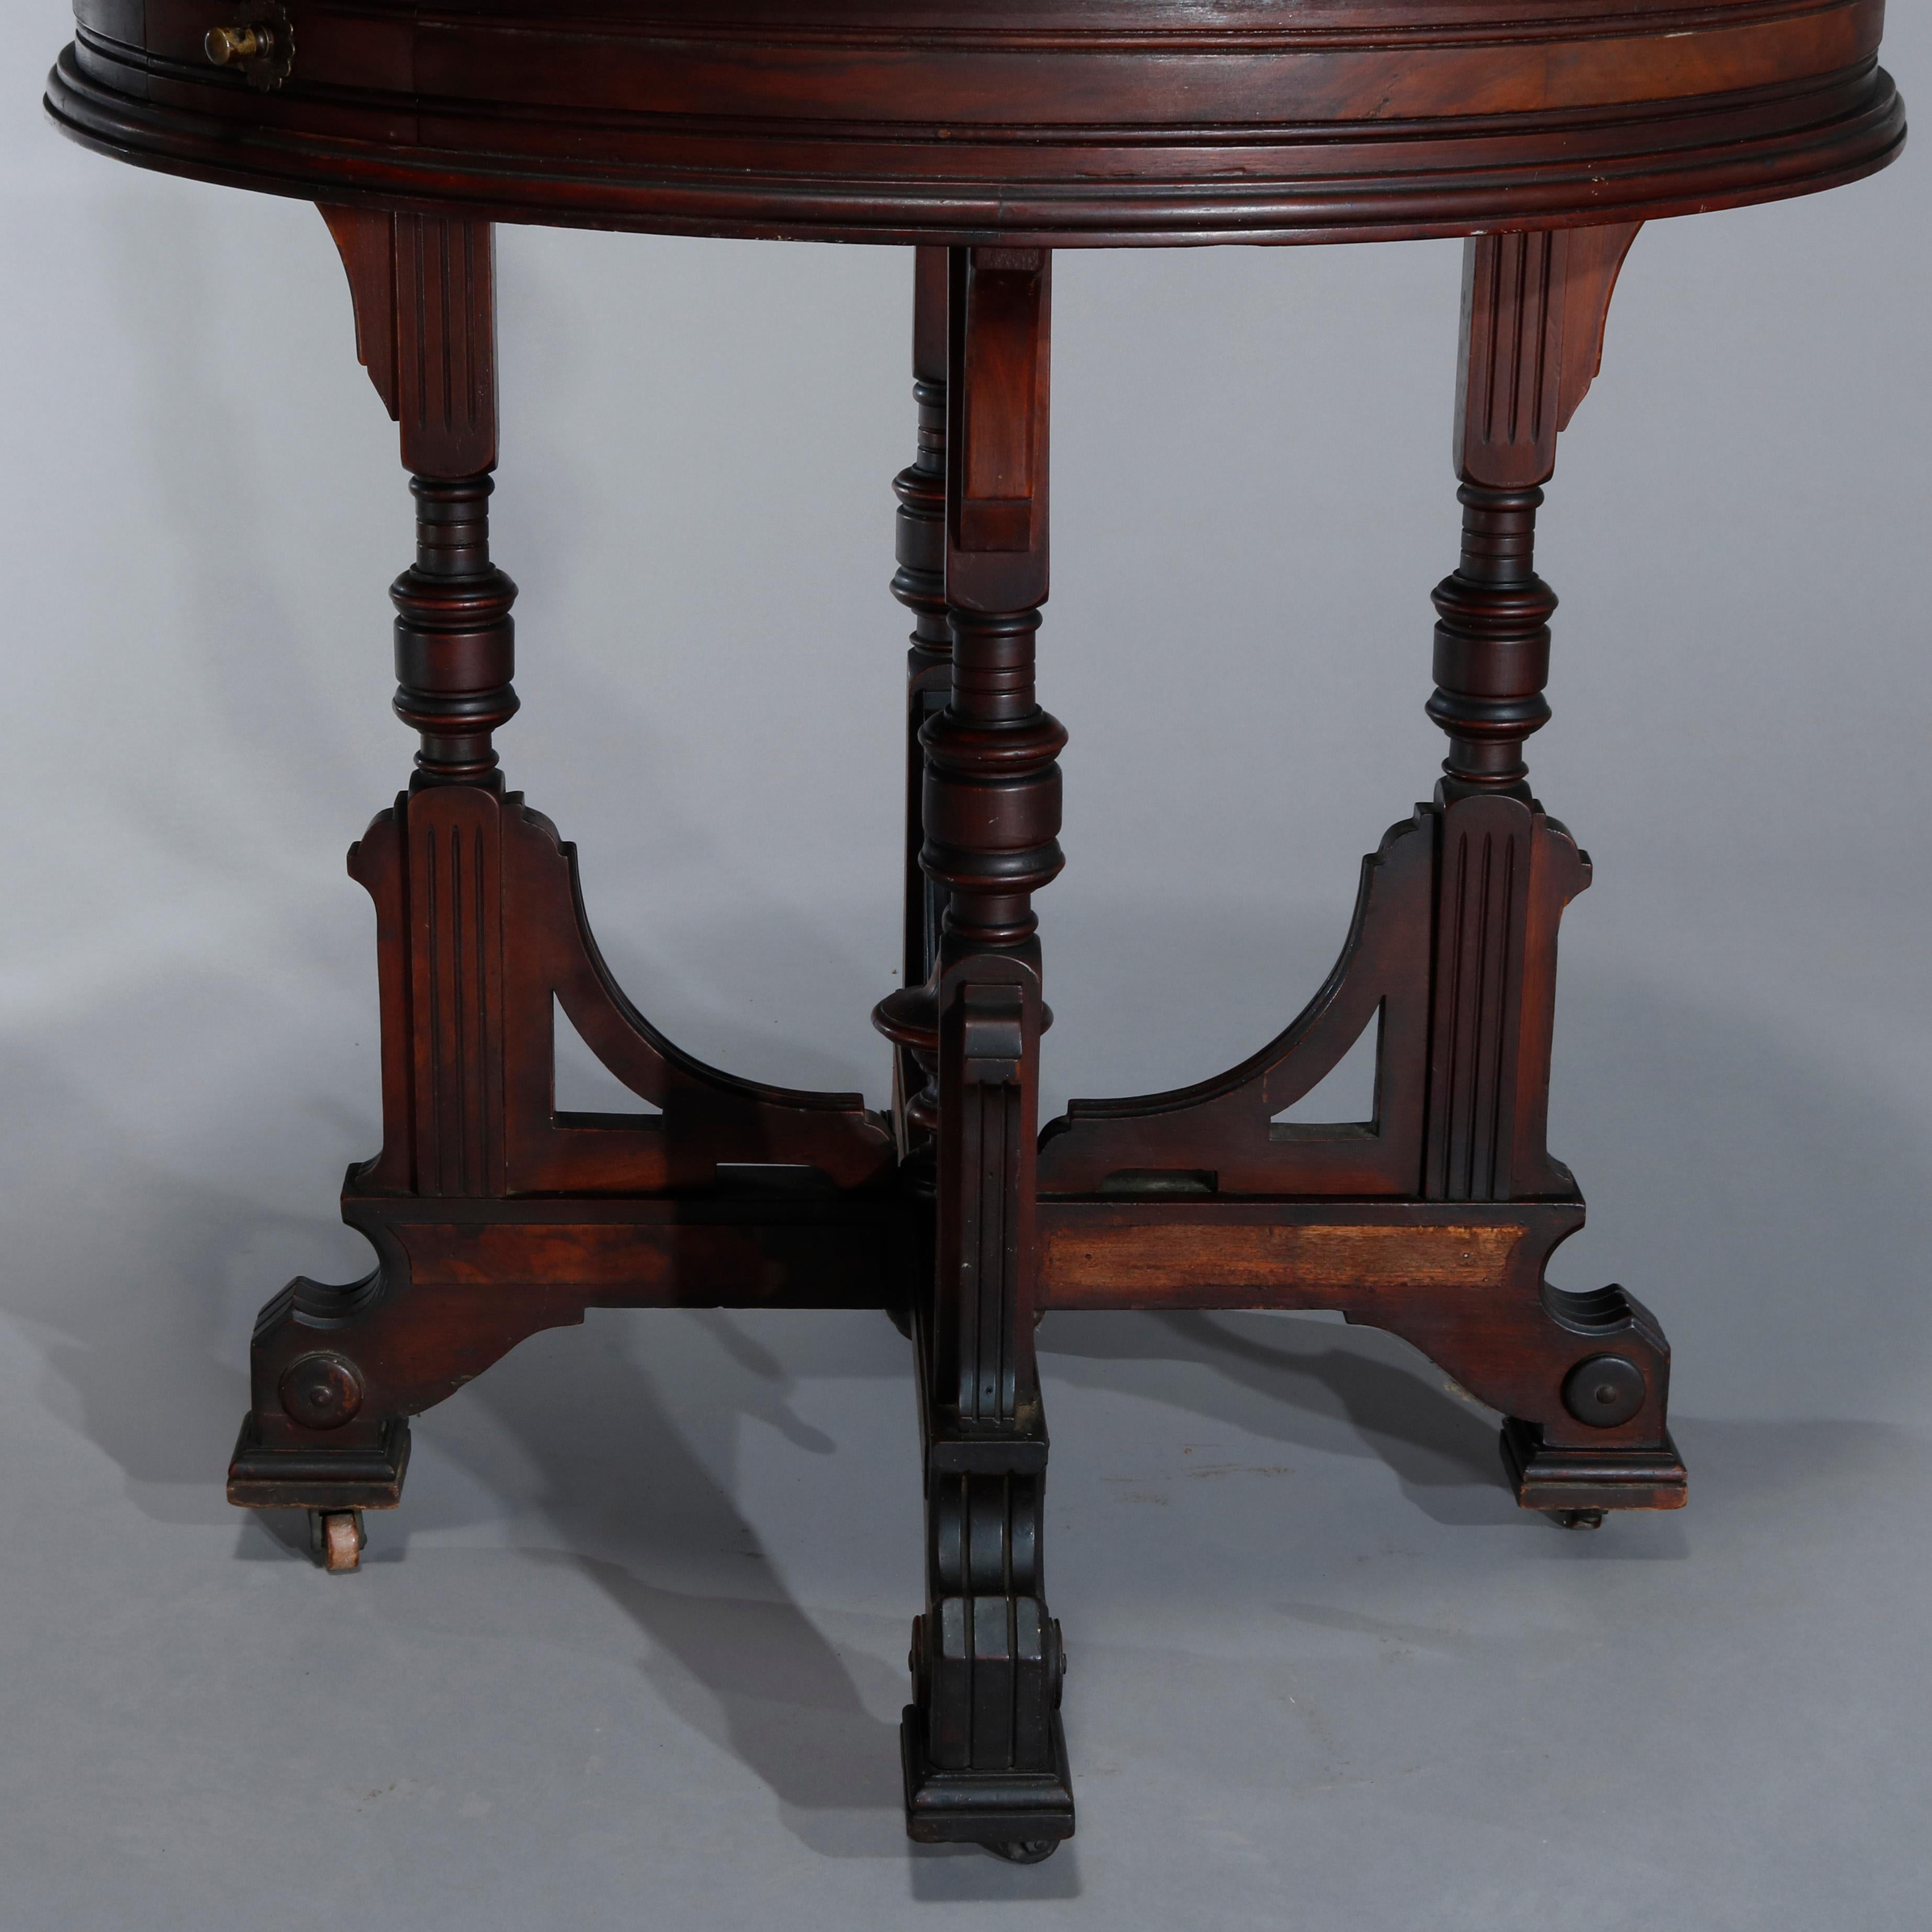 European Antique Eastlake Carved Walnut Single Drawer Parlor Lamp Table, circa 1890